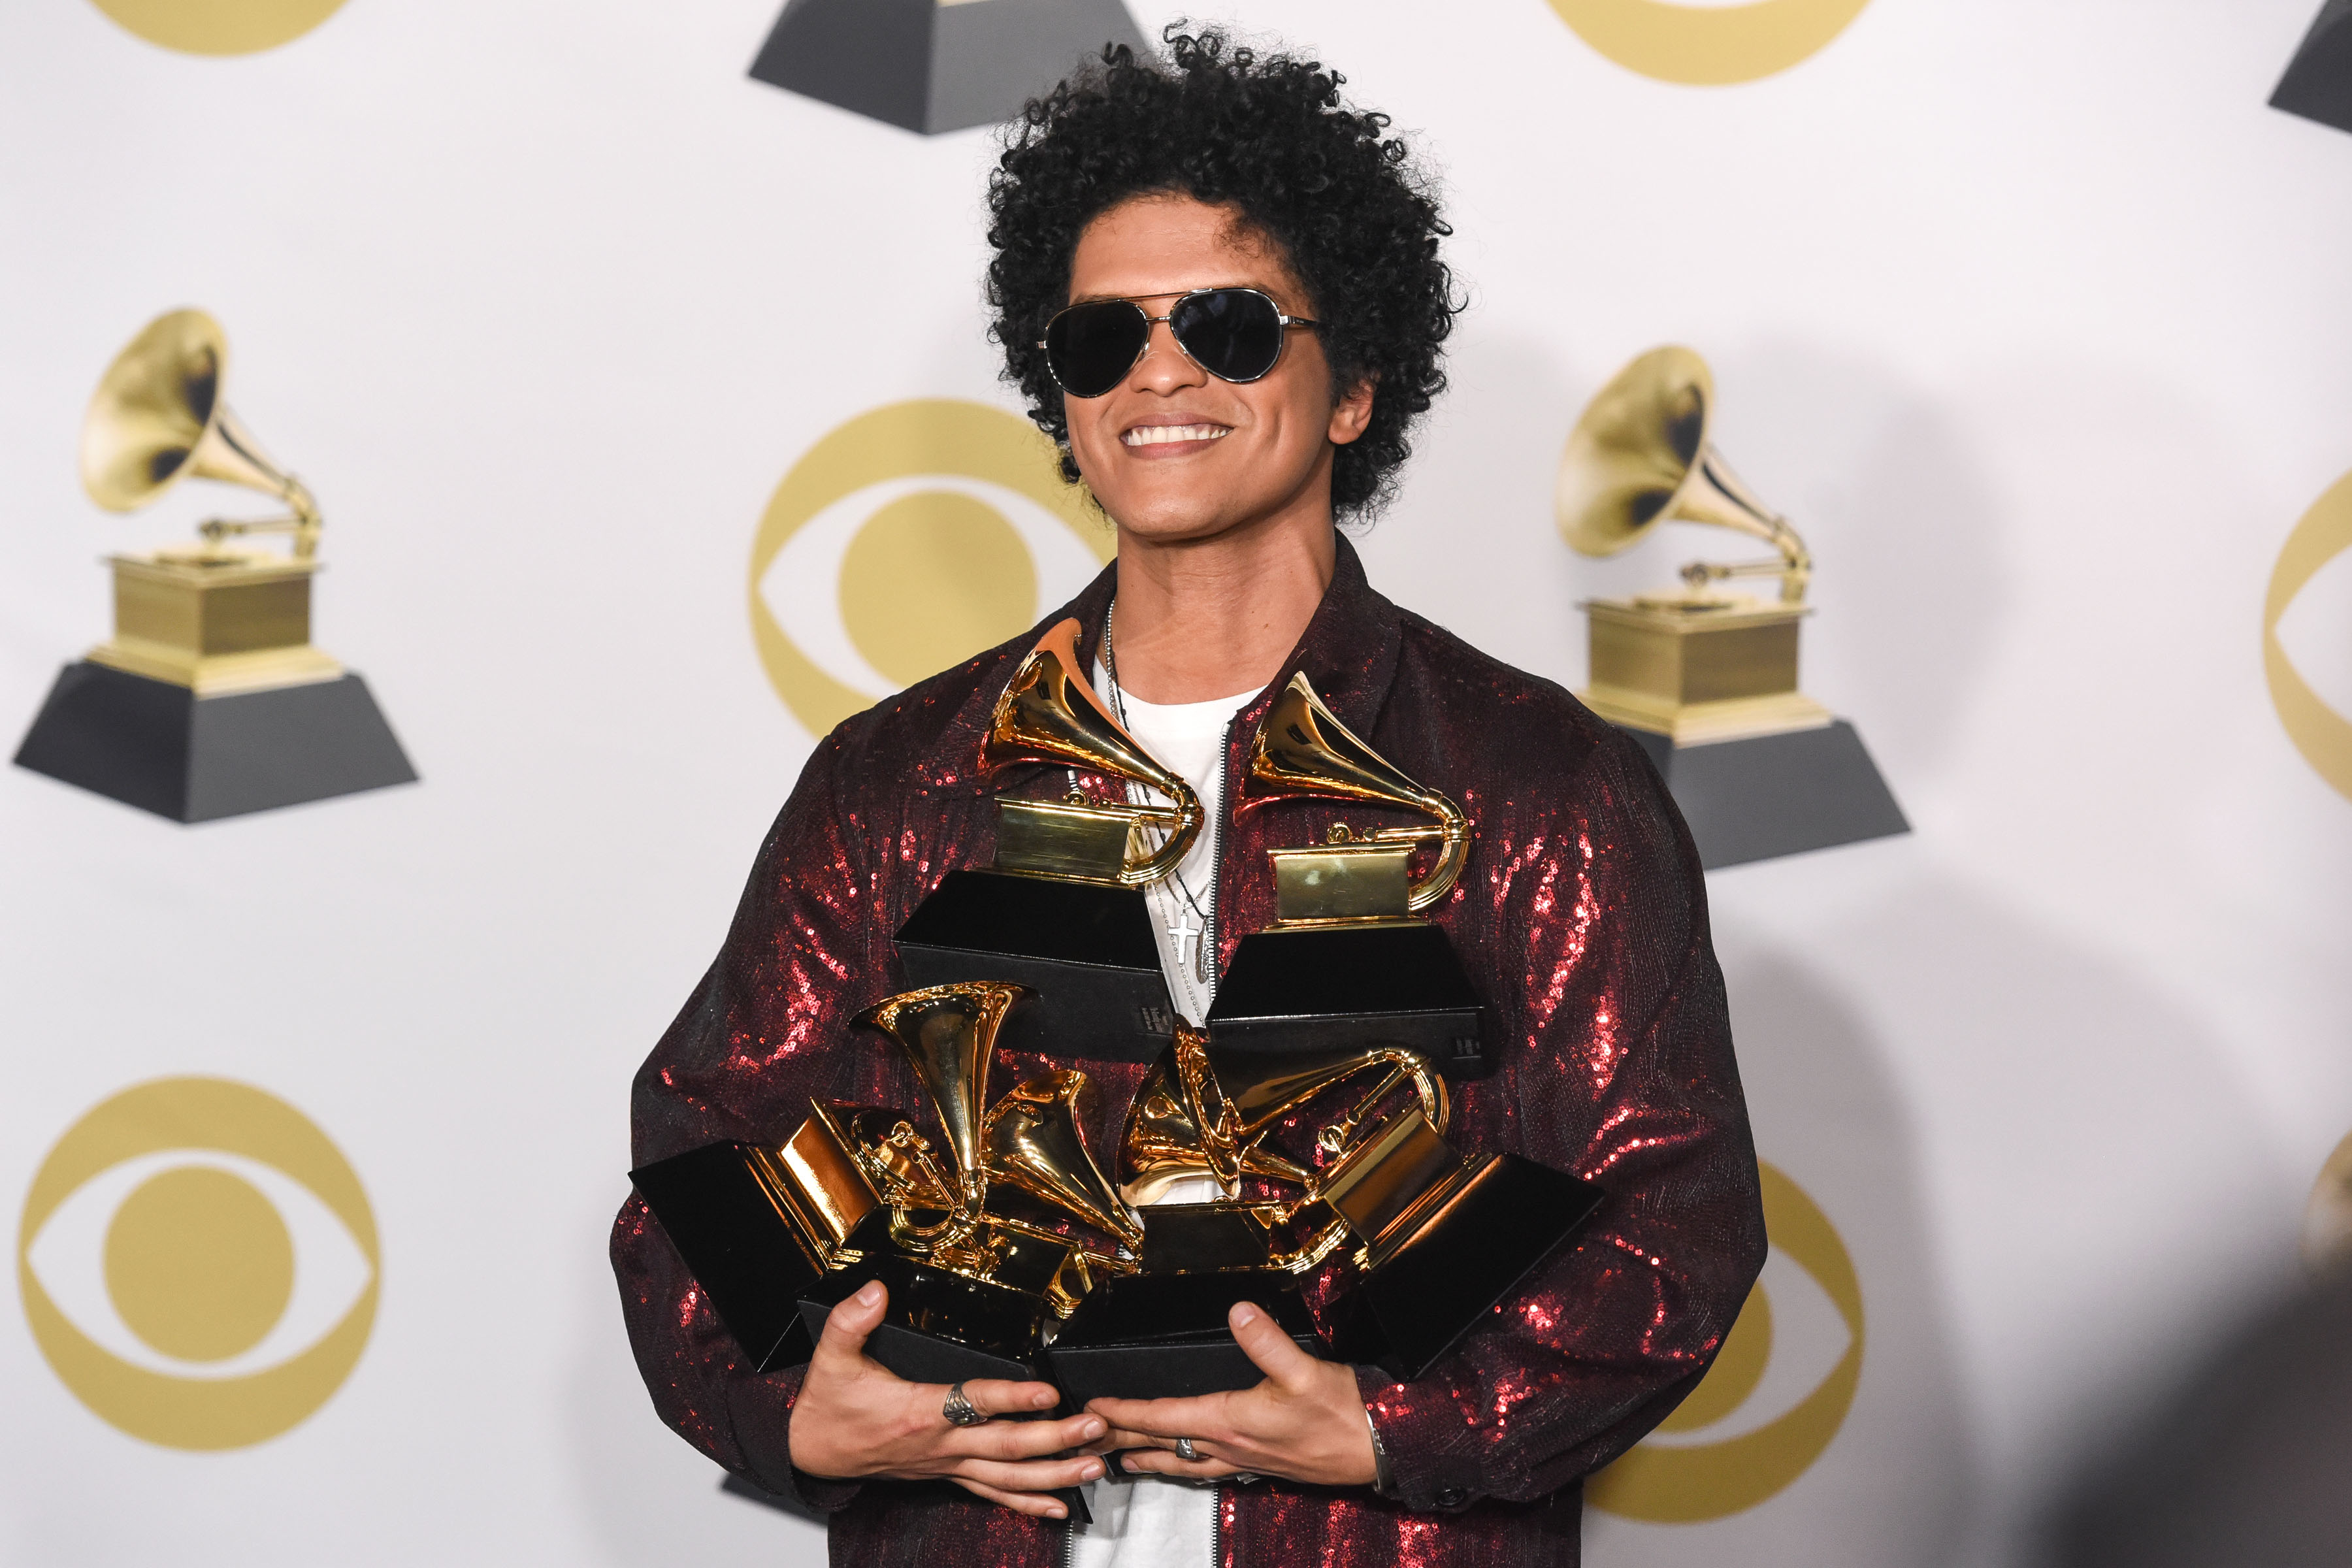 Bruno Mars holding his Grammy awards